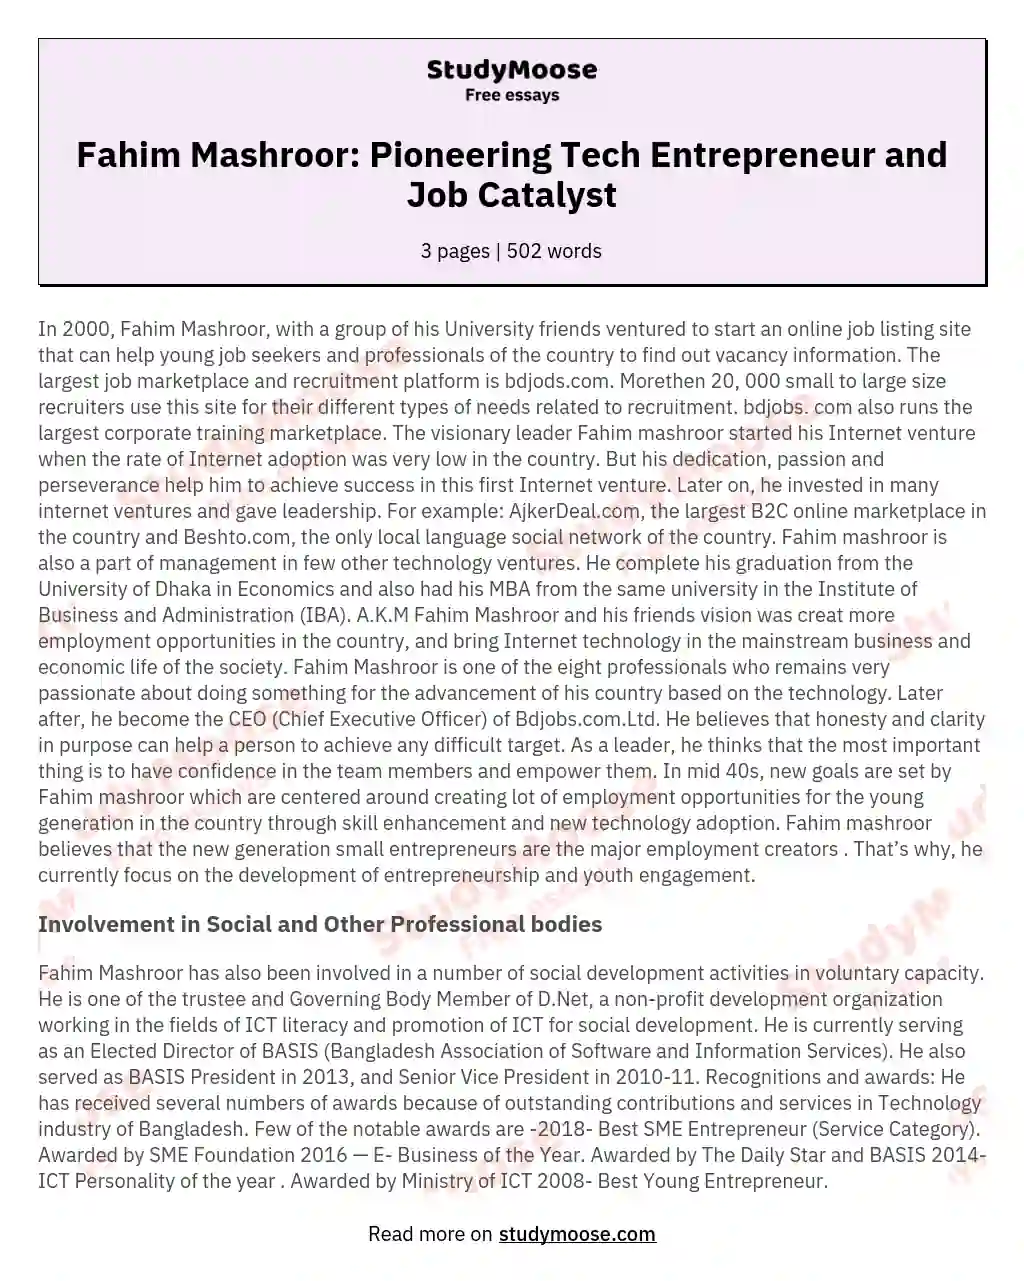 Fahim Mashroor: Pioneering Tech Entrepreneur and Job Catalyst essay